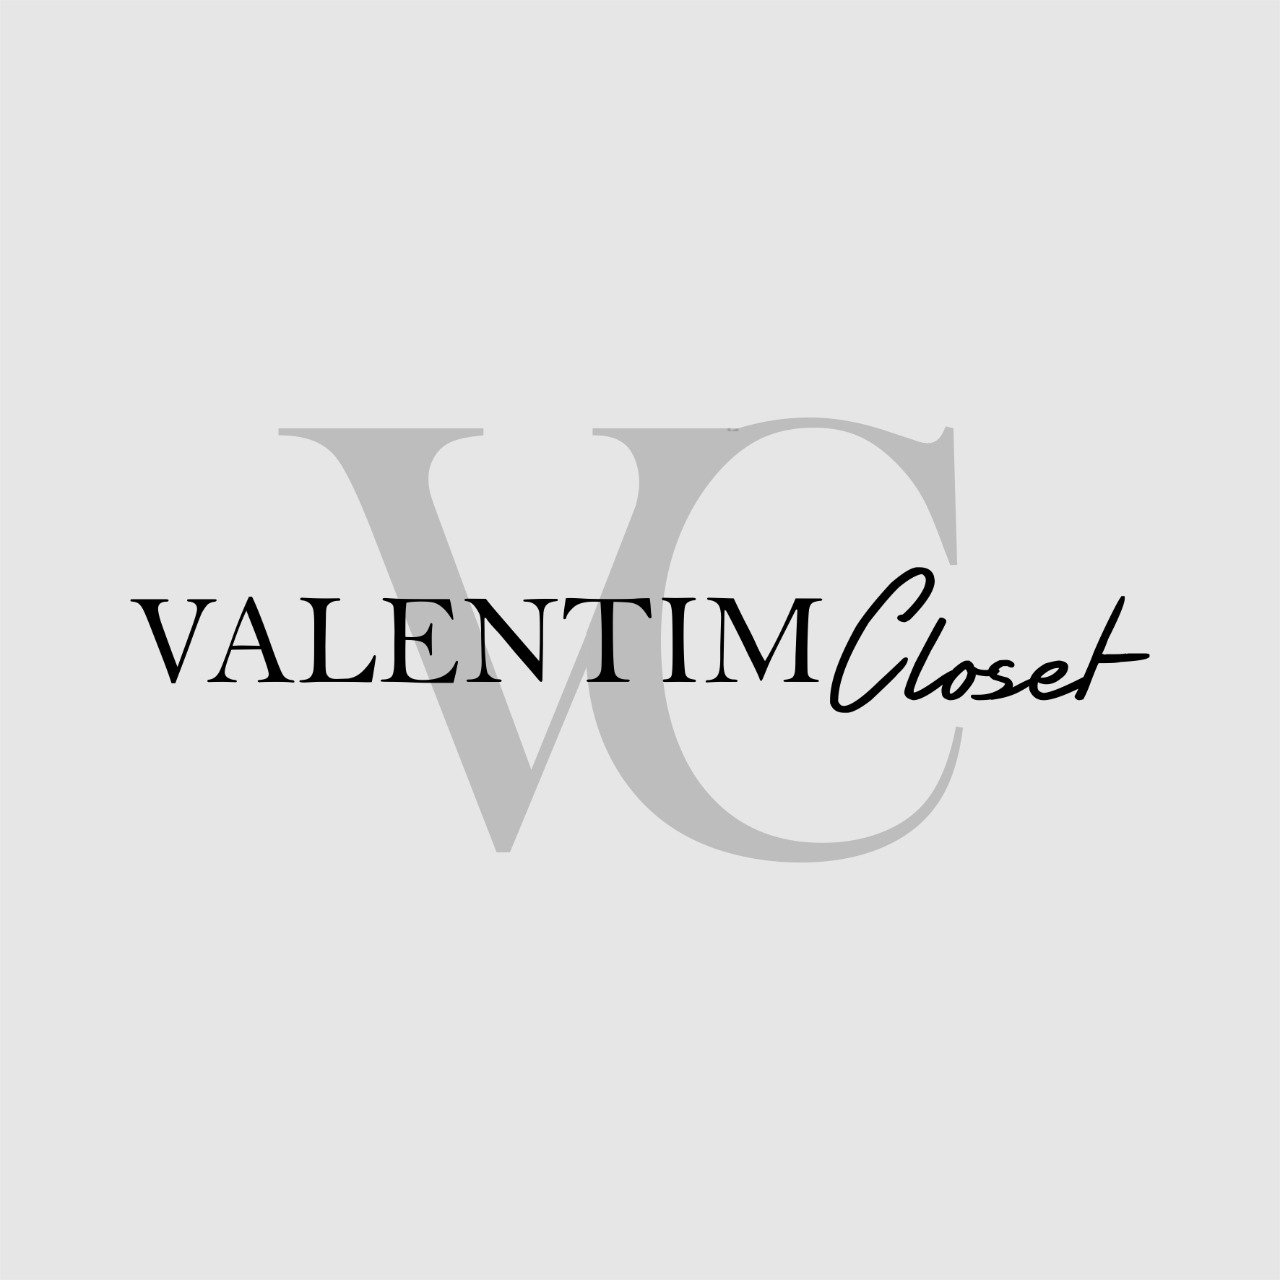 Valentim Closet